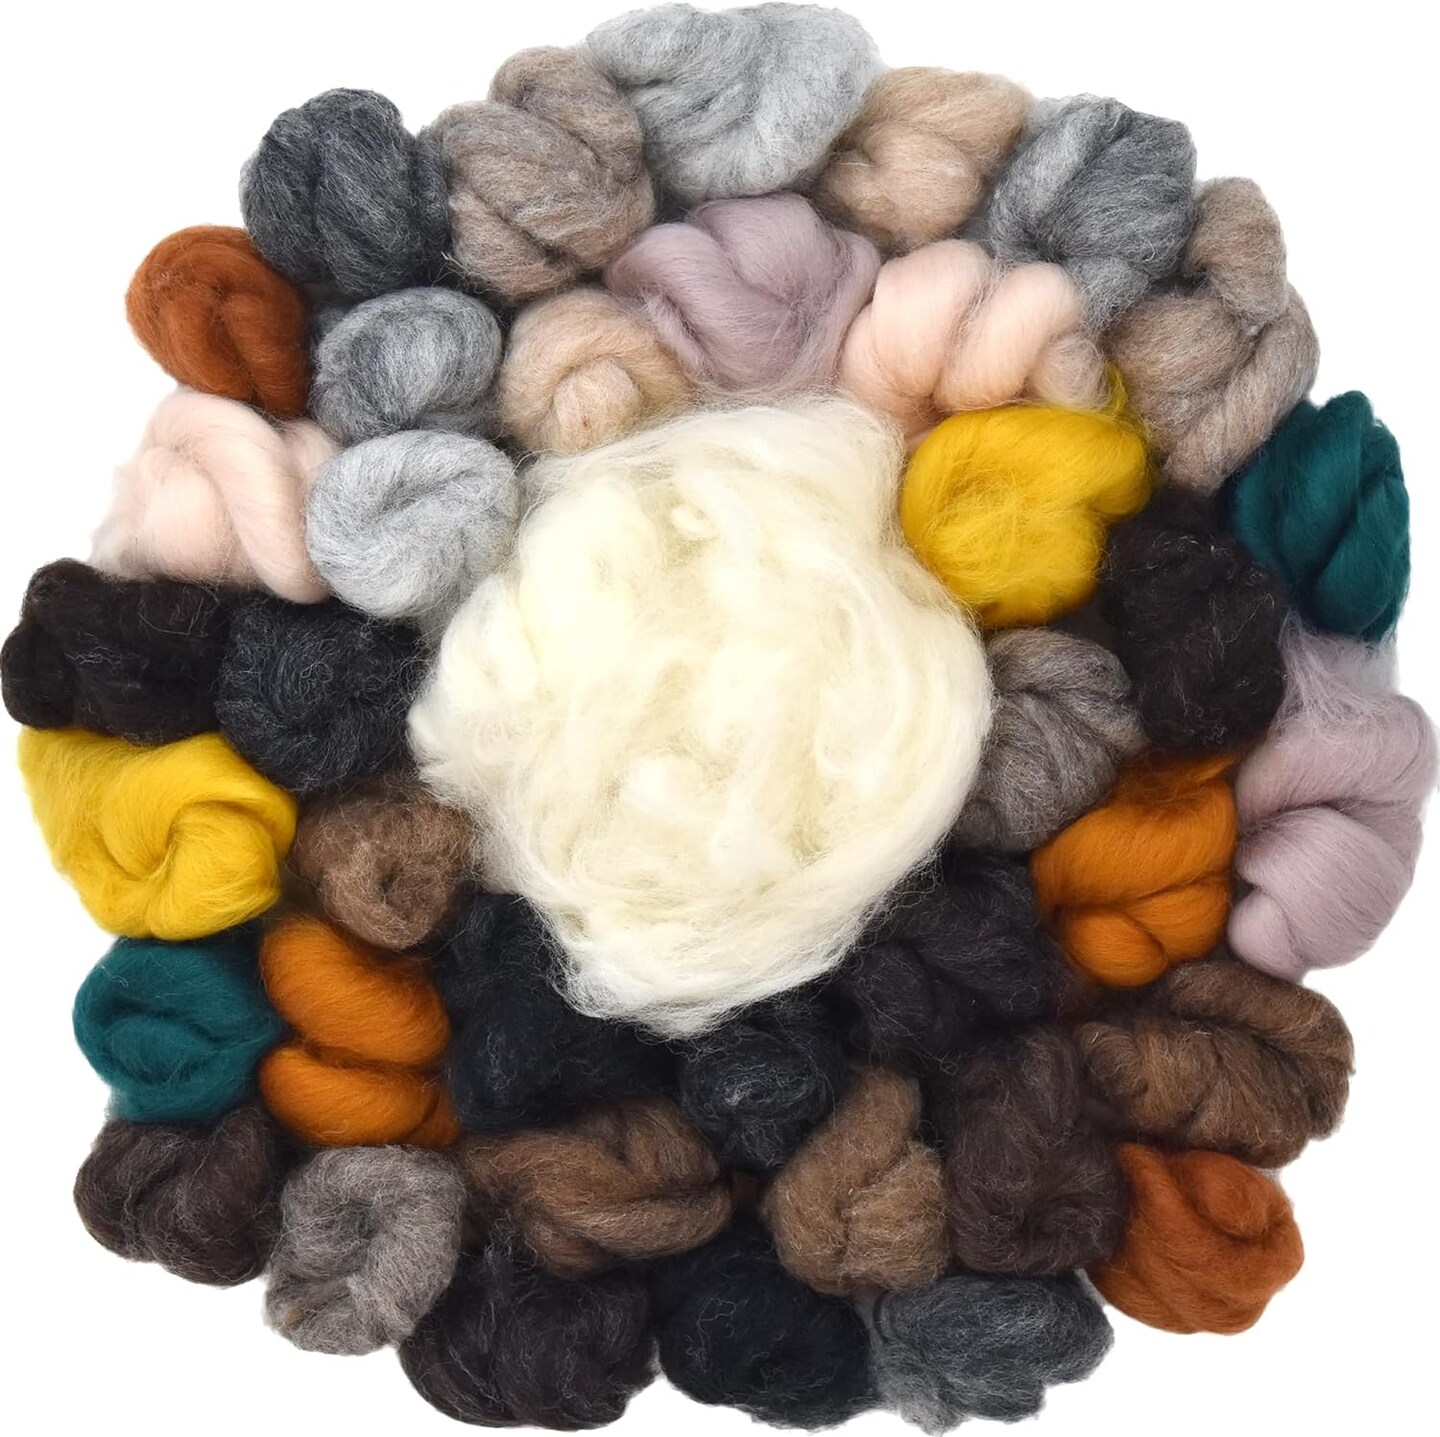 Corriedale Roving &#x26; White Natural Core Wool for Needle Felting, Spinning, Blending. Carded Wool for Fiber Art, Critter Color Variety Pack, 7oz/200g